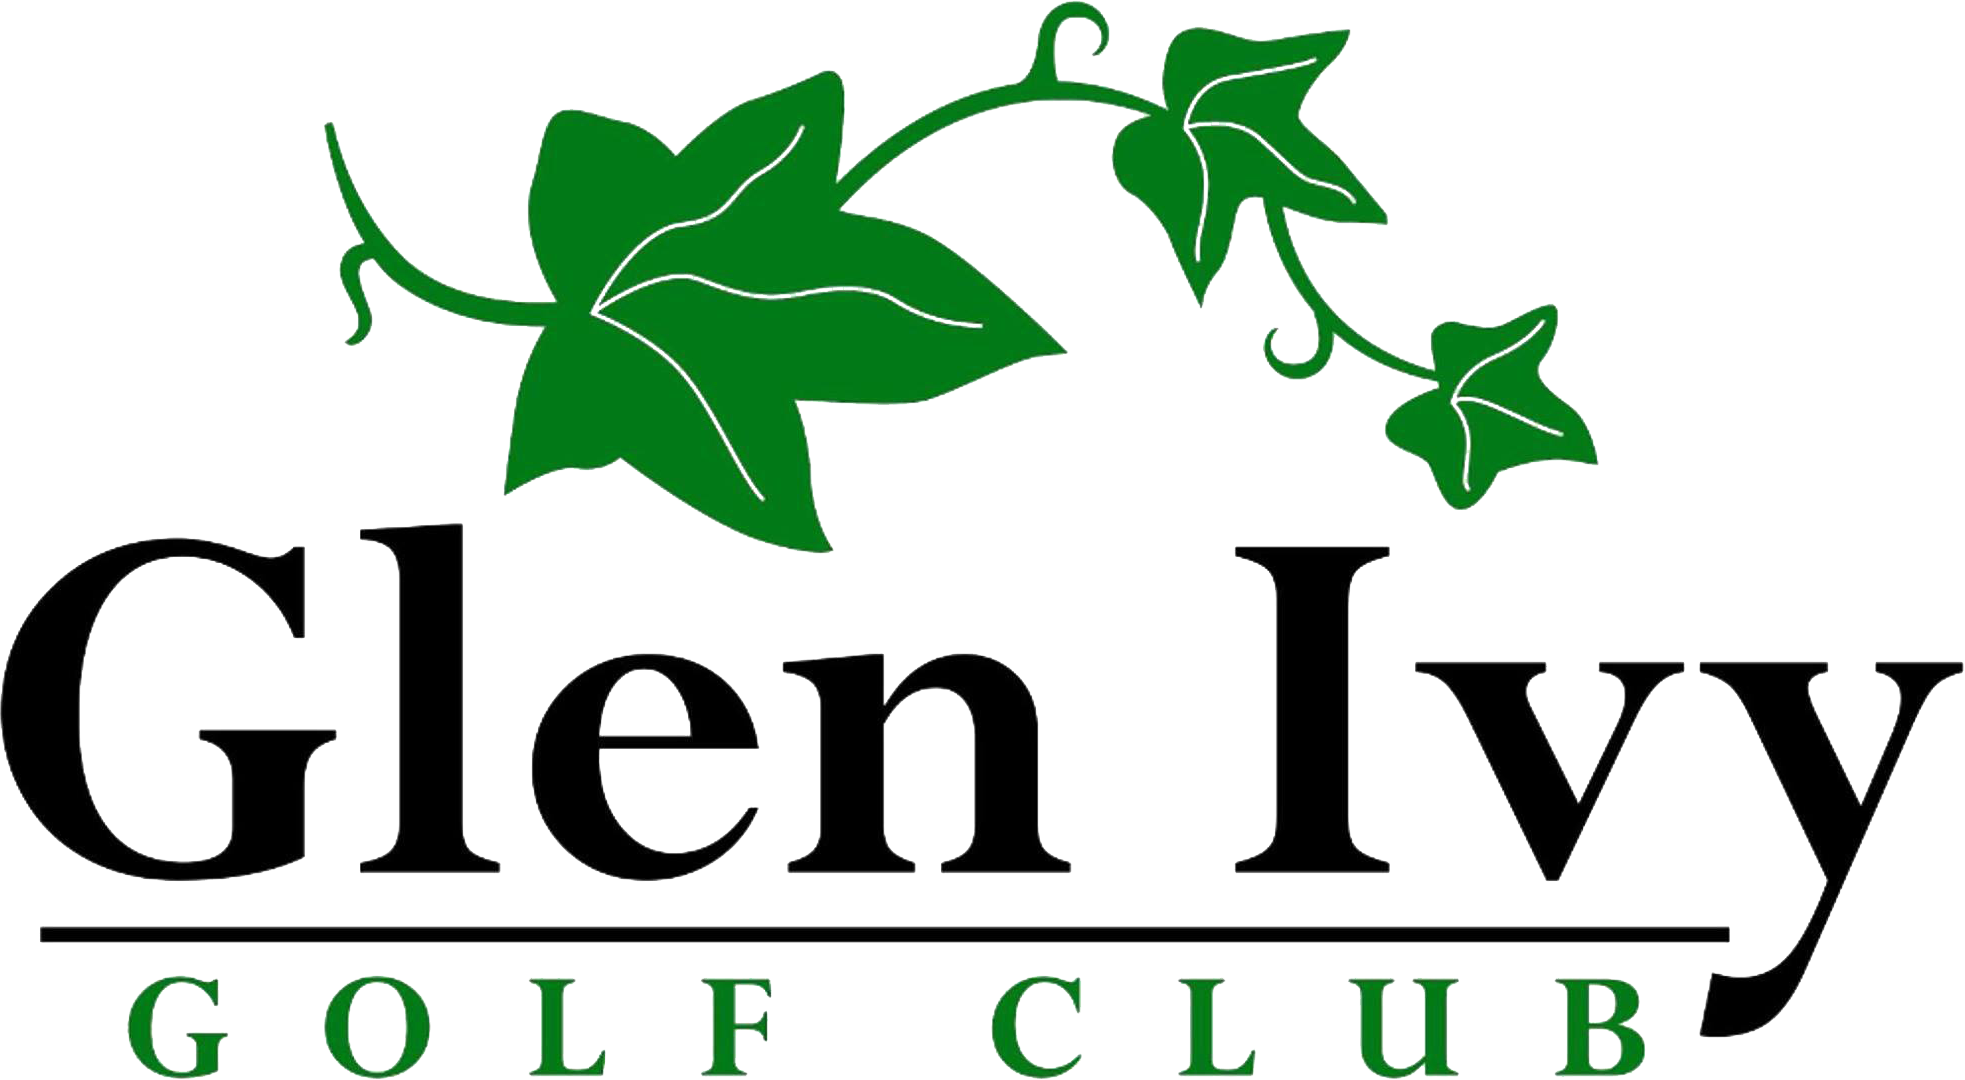 JC Golf Logo small